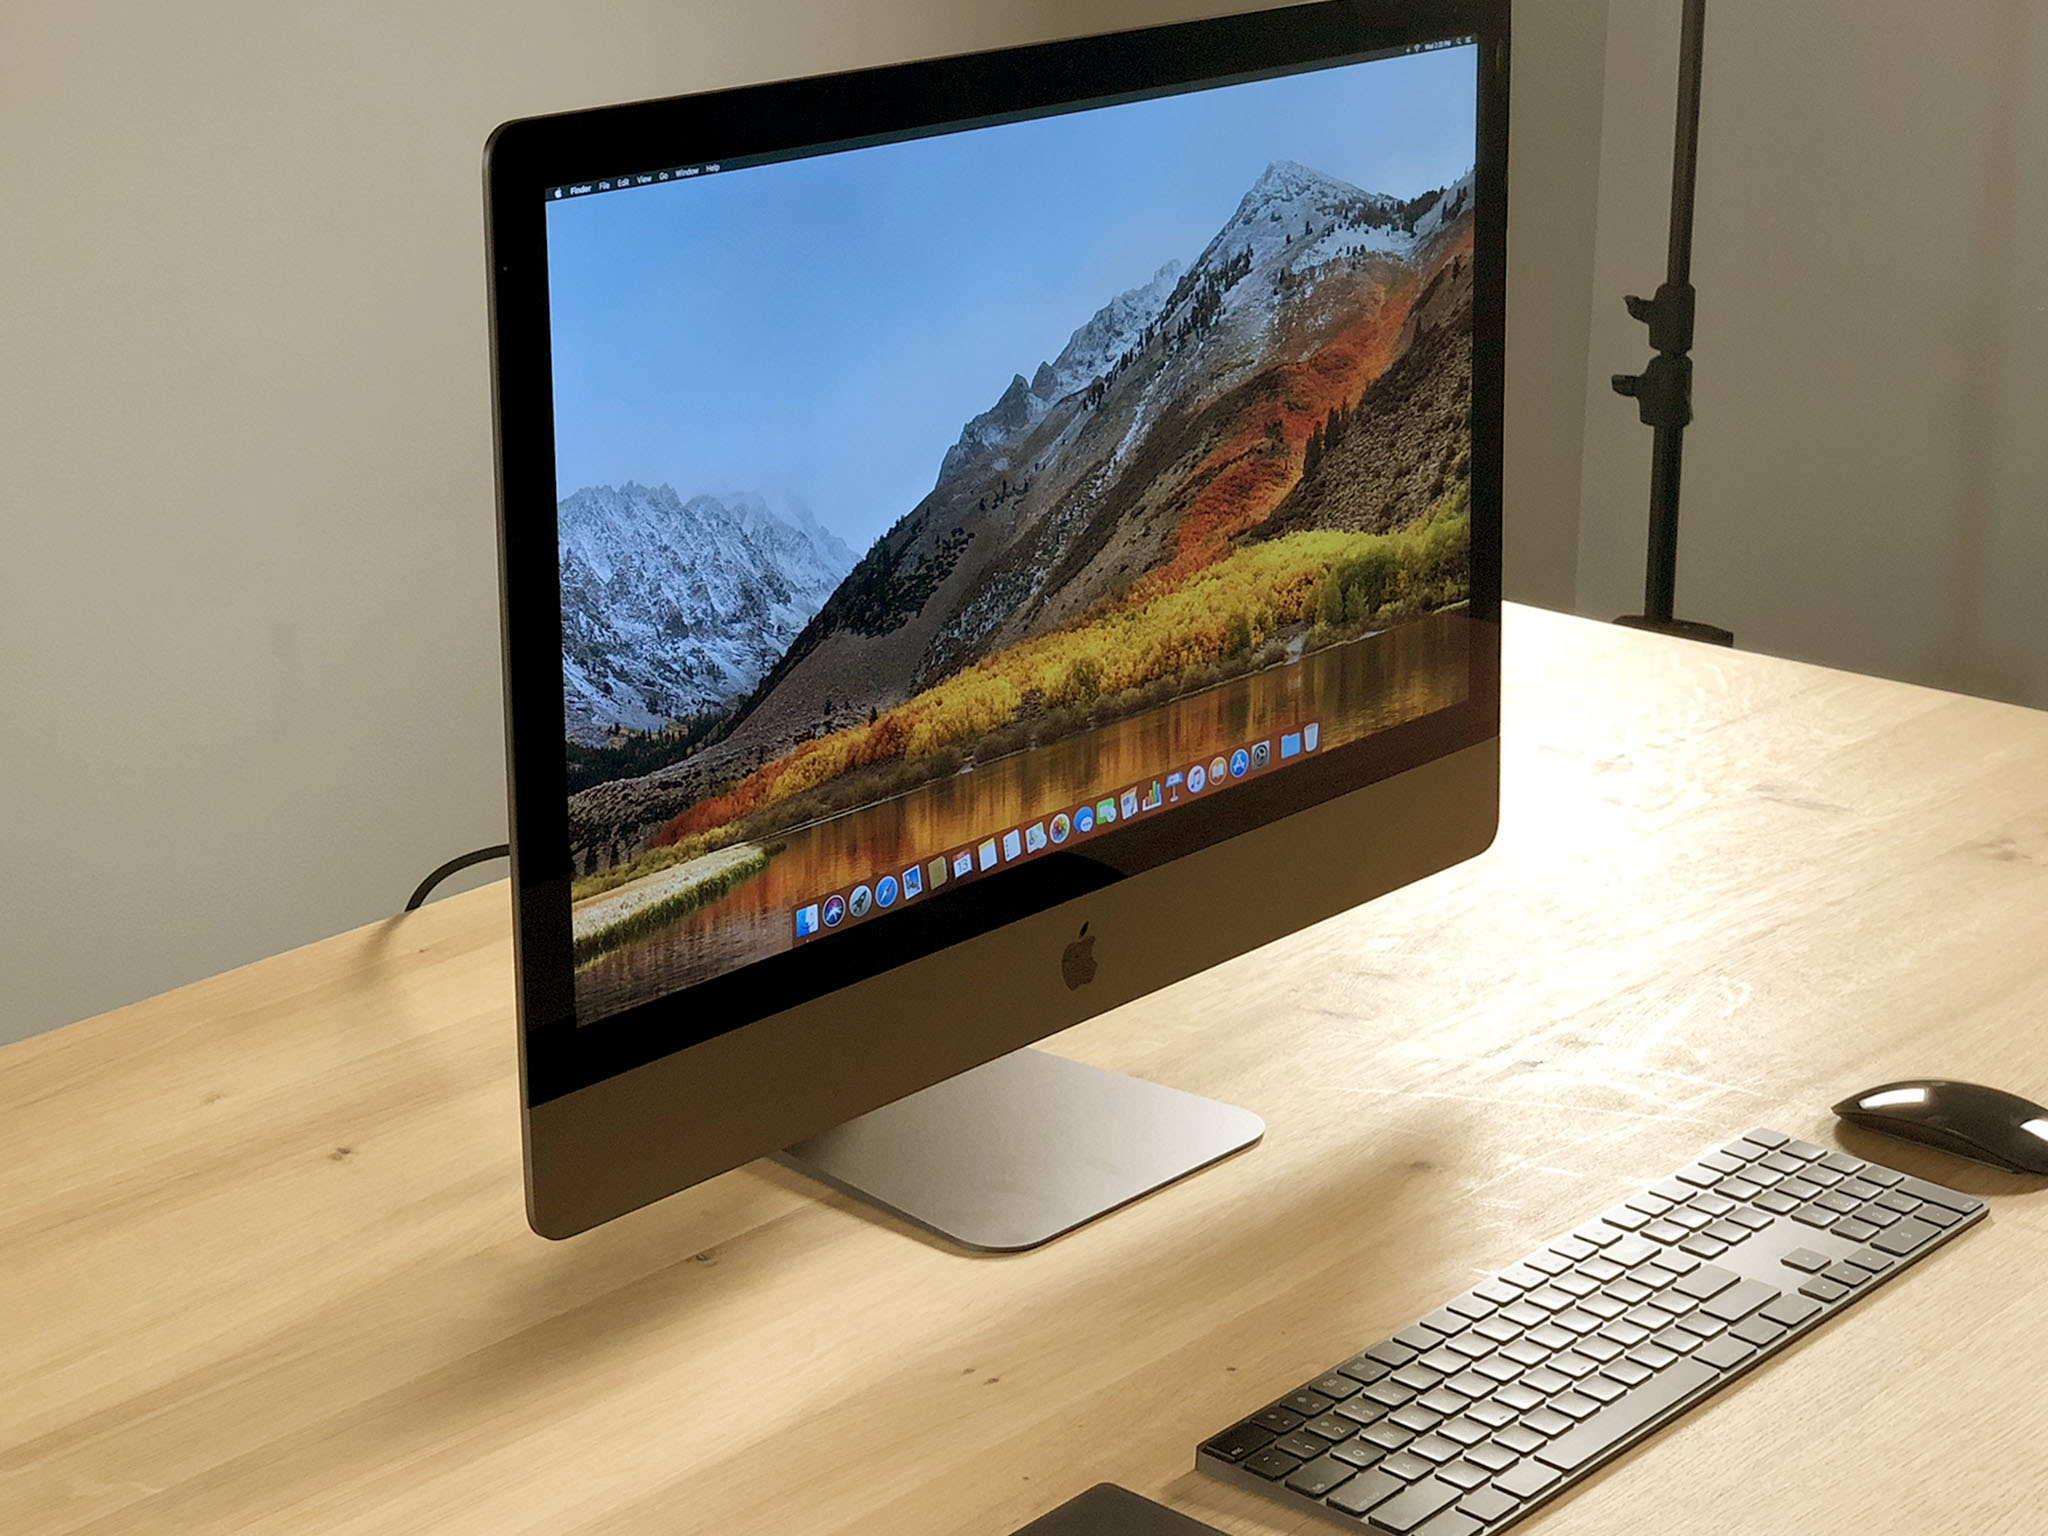 MacBook Pro brings True Tone support to LG UltraFine, Apple Thunderbolt displays